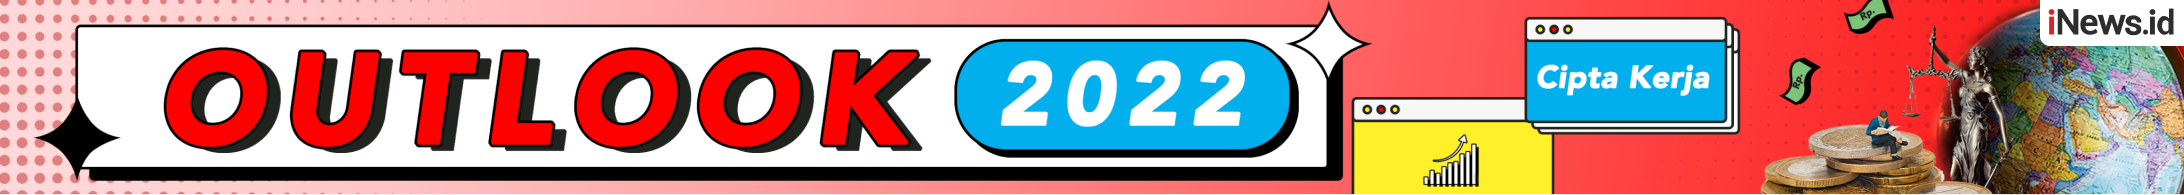 Outlook 2022 Inews